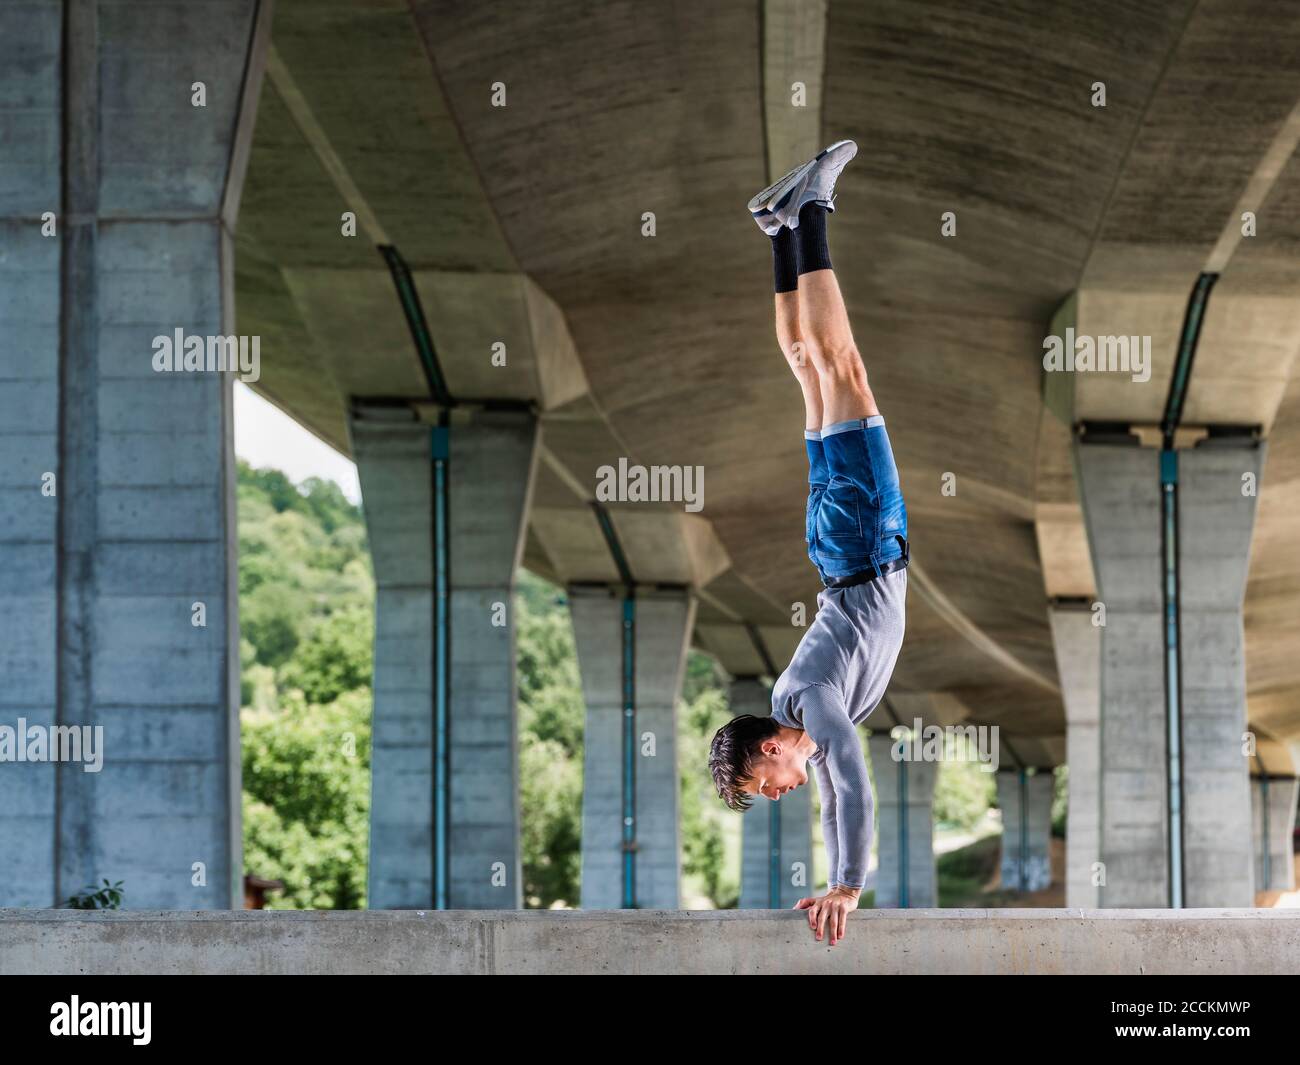 Young man doing acrobatics Stock Photo